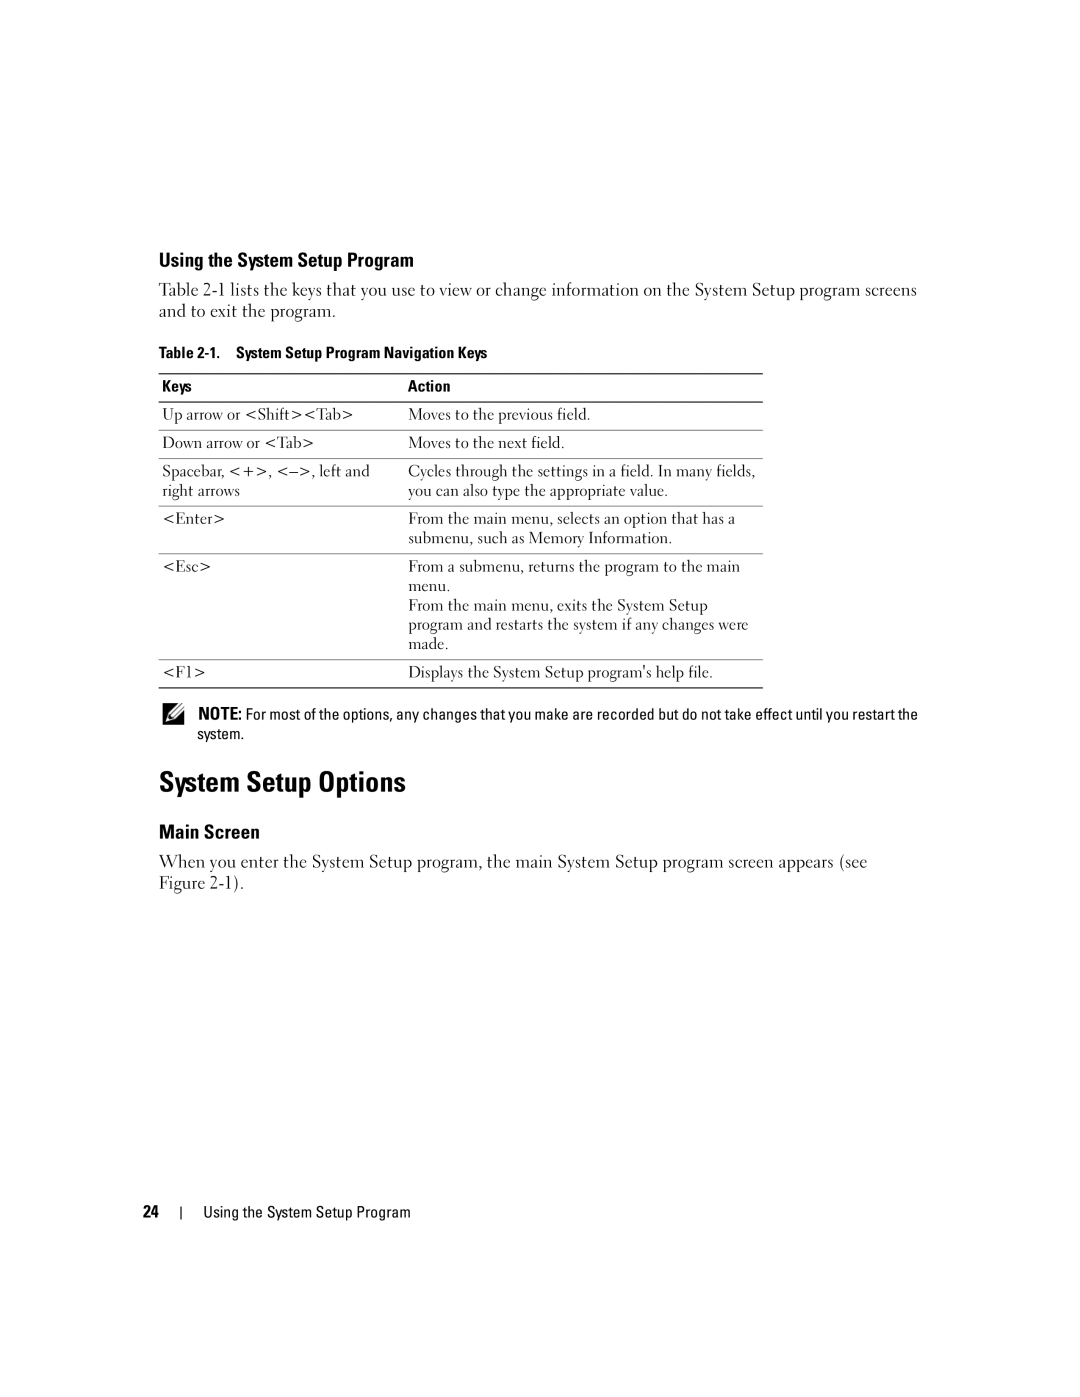 Dell SC1435 owner manual System Setup Options, Using the System Setup Program, Main Screen 